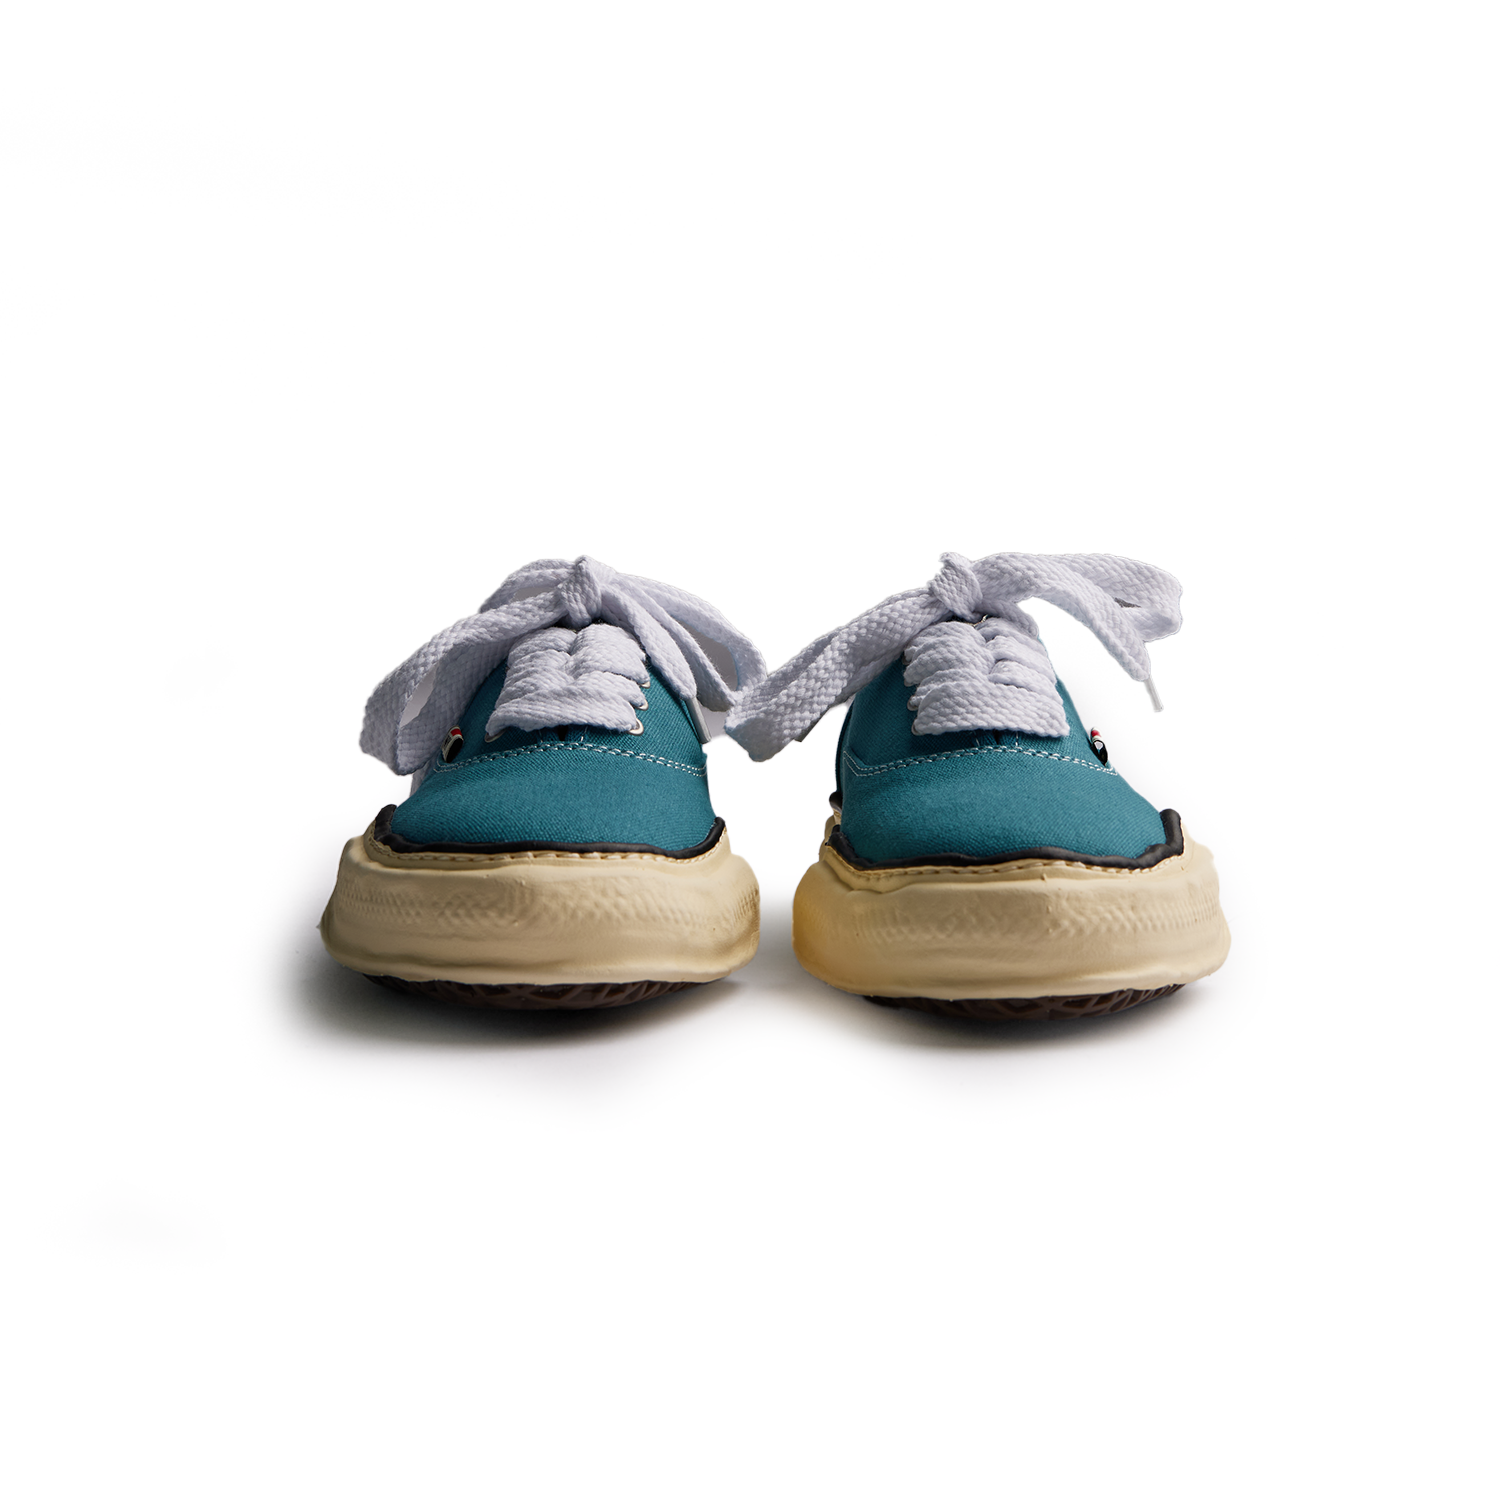 MAISON MIHARA YASUHIRO - Baker Low Sneaker product image